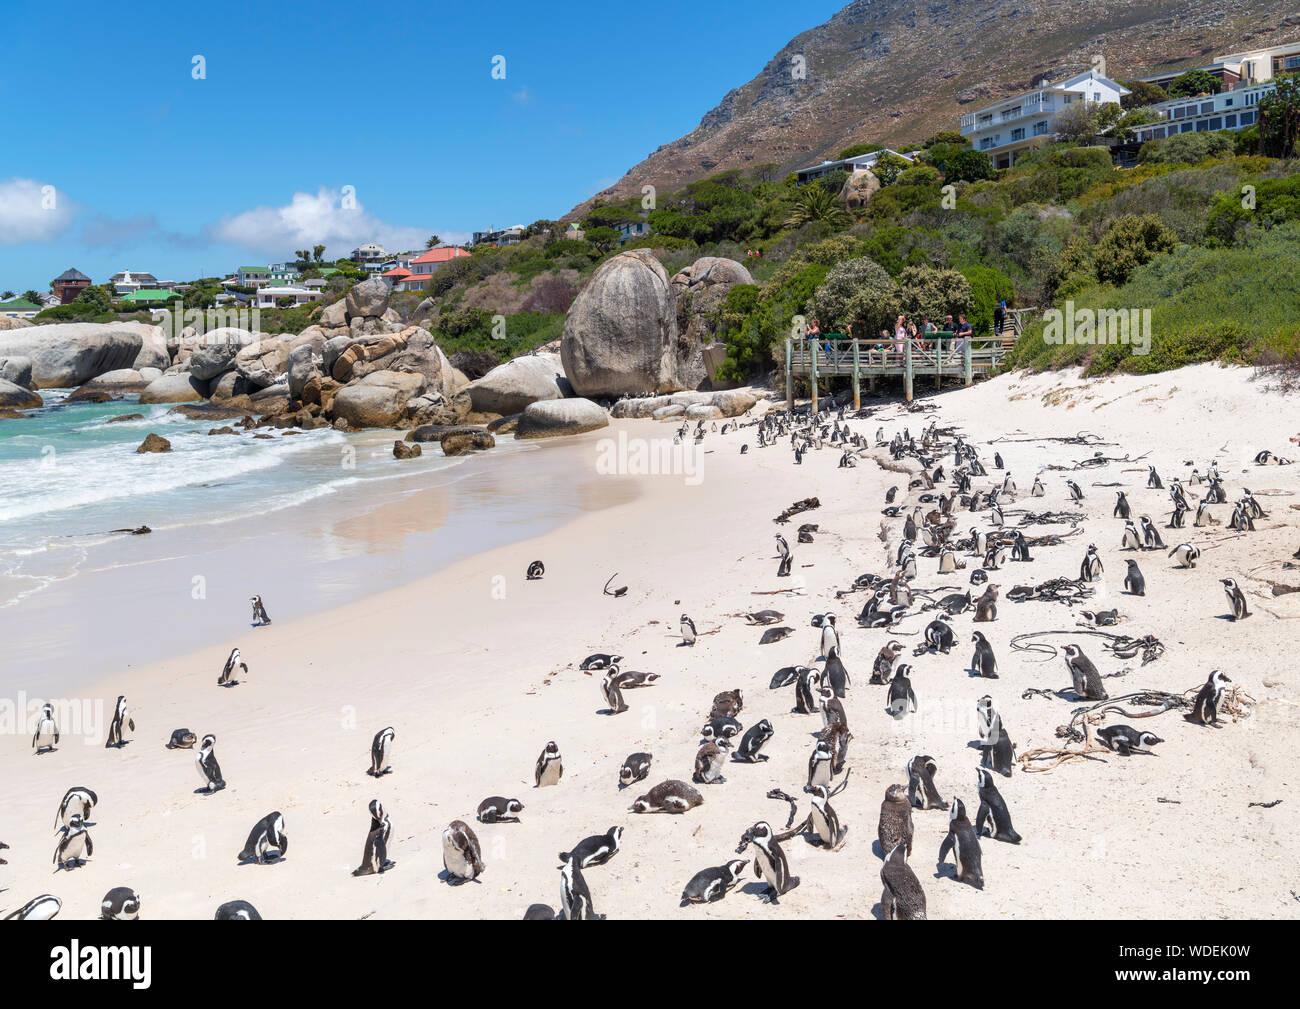 La colonia dei Pinguini africani (Spheniscus demersus) a Boulders Beach, Città di Simon, Cape Town, Western Cape, Sud Africa Foto Stock